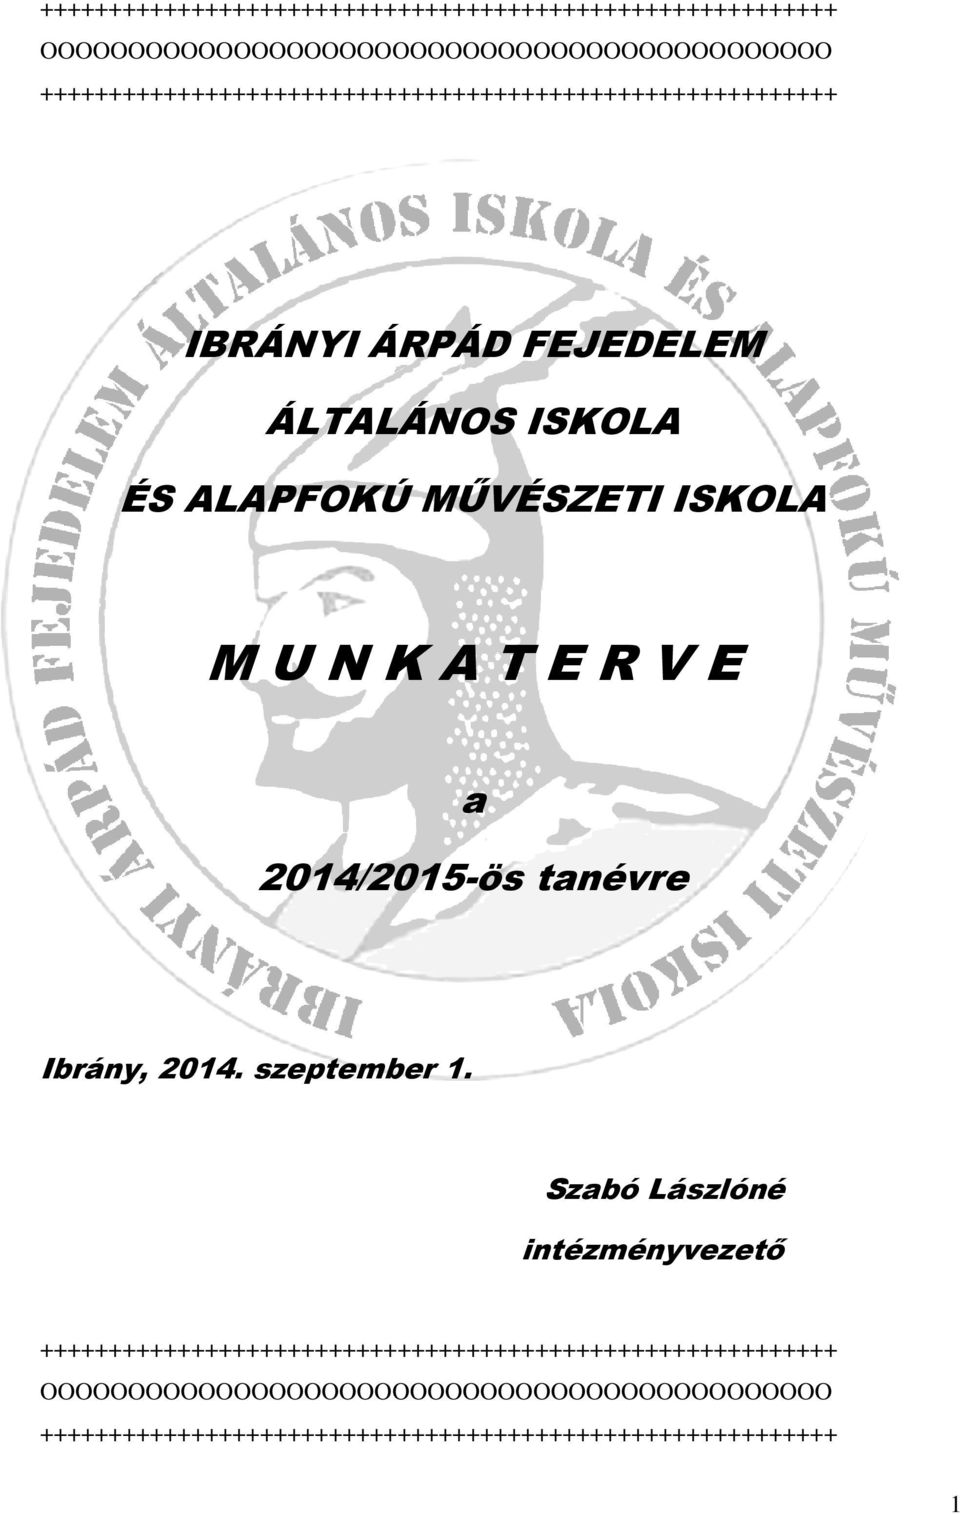 ISKOLA M U N K A T E R V E a 2014/2015-ös tanévre Ibrány, 2014. szeptember 1.